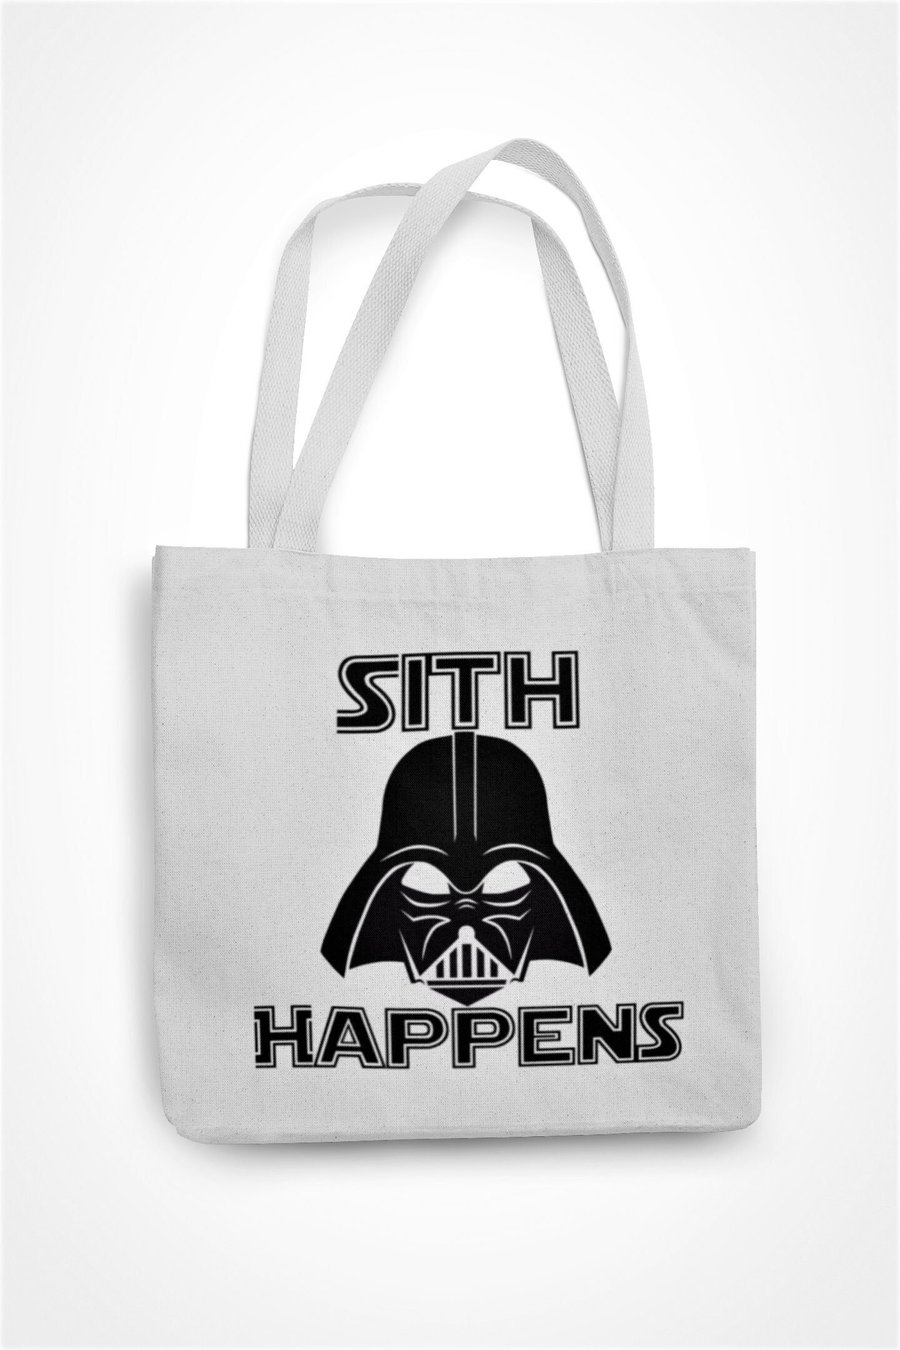 Sth Shit Happens Tote Bag Funny Novelty Star Wars Sci Fi Joke Funny Gift